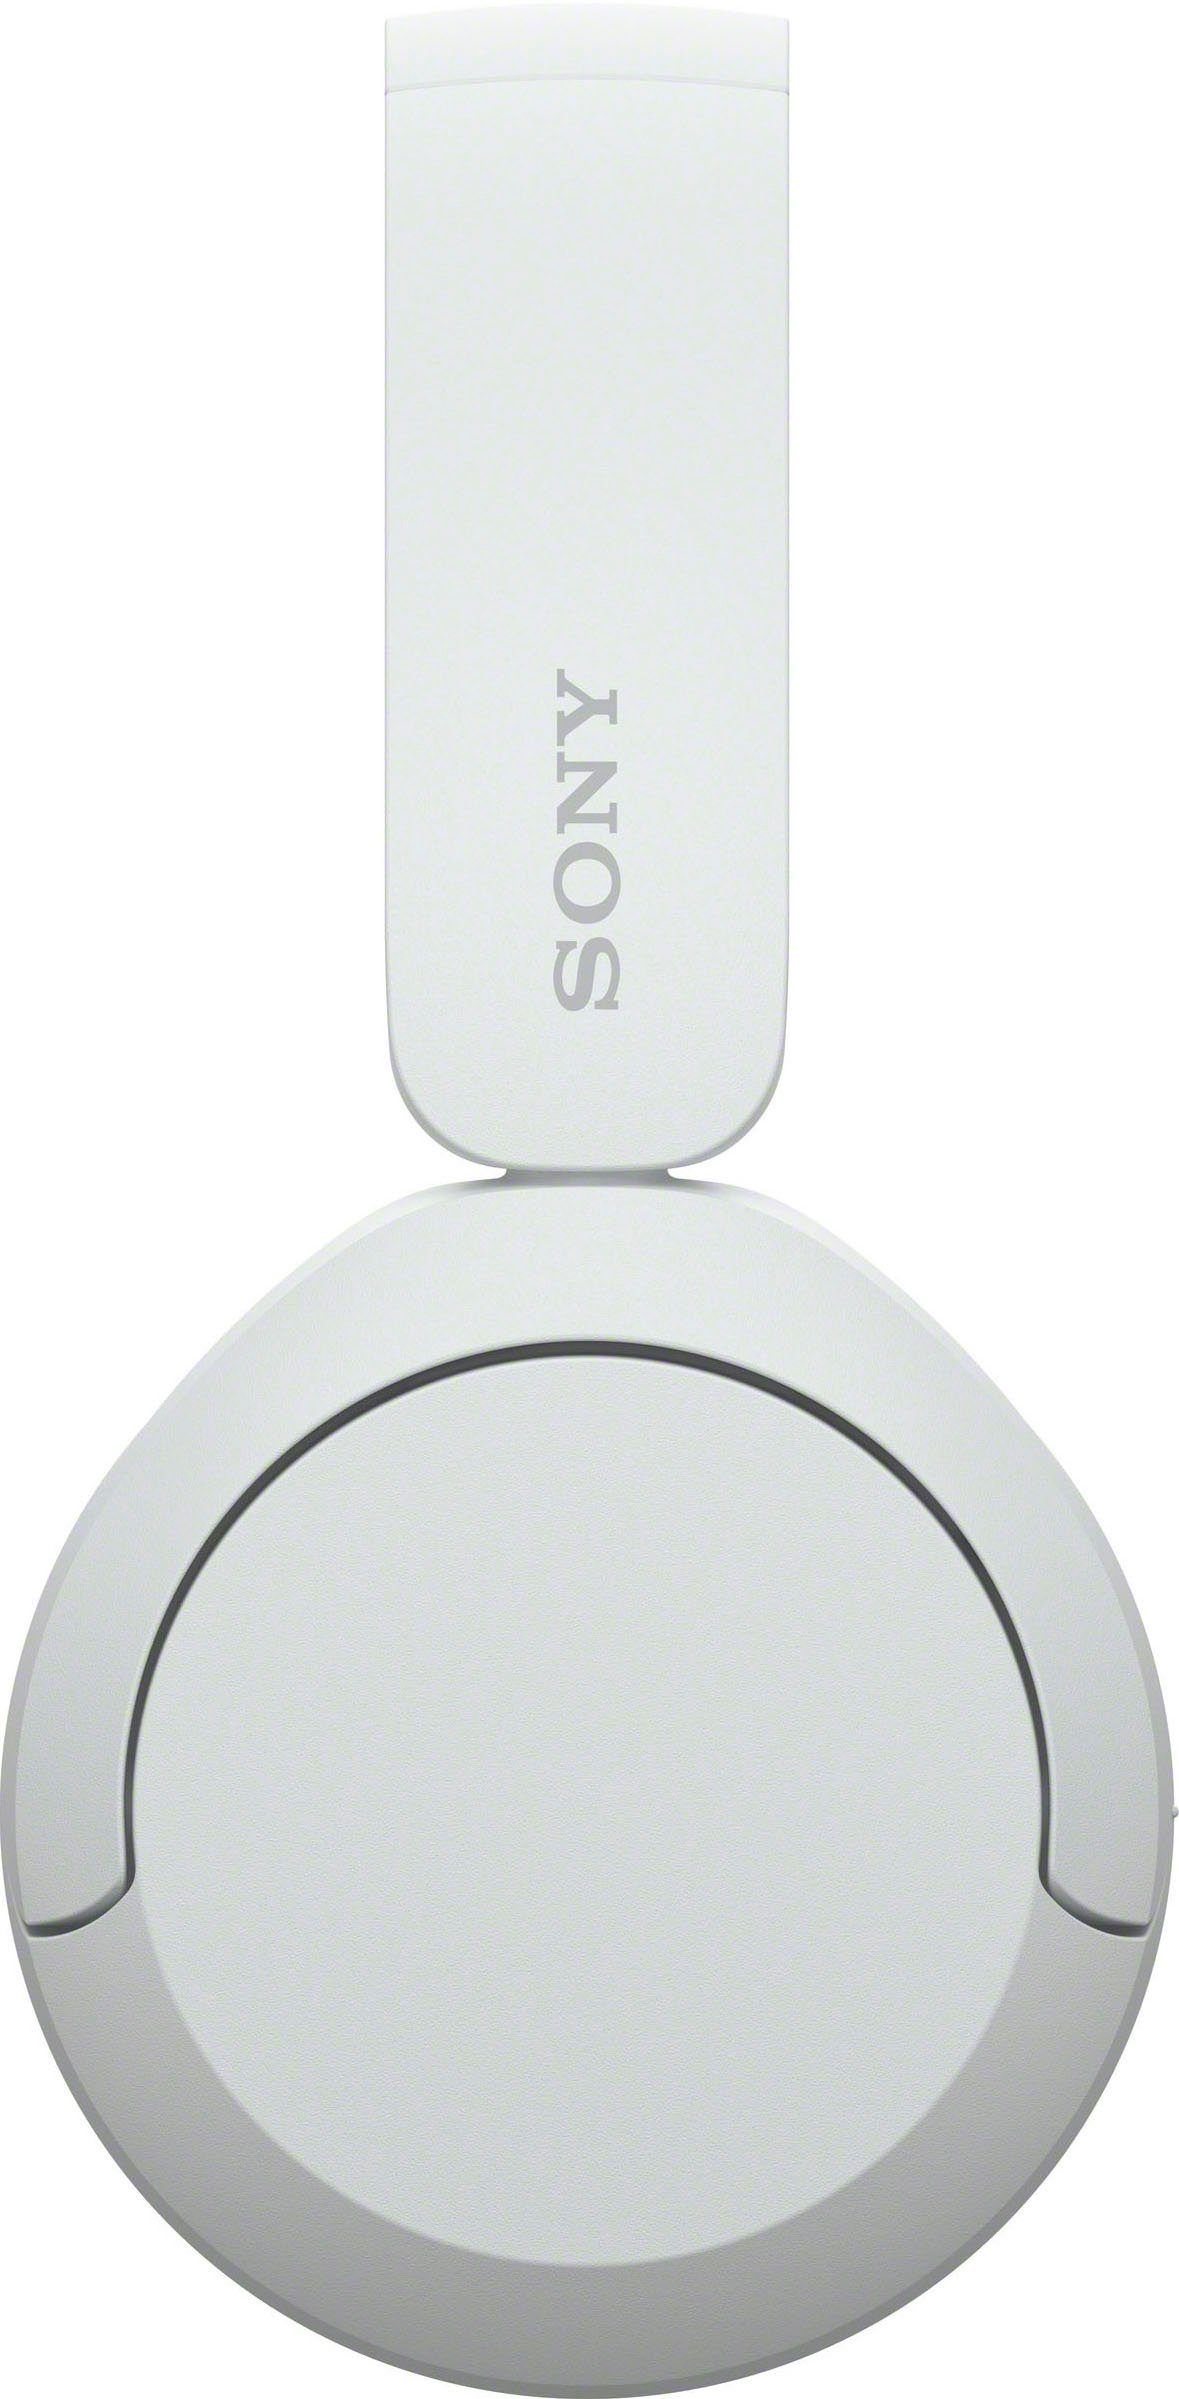 (Freisprechfunktion, 50 Akkulaufzeit) Assistant, Std. Sony WHCH520 Google Siri, Rauschunterdrückung, On-Ear-Kopfhörer Bluetooth, Weiß